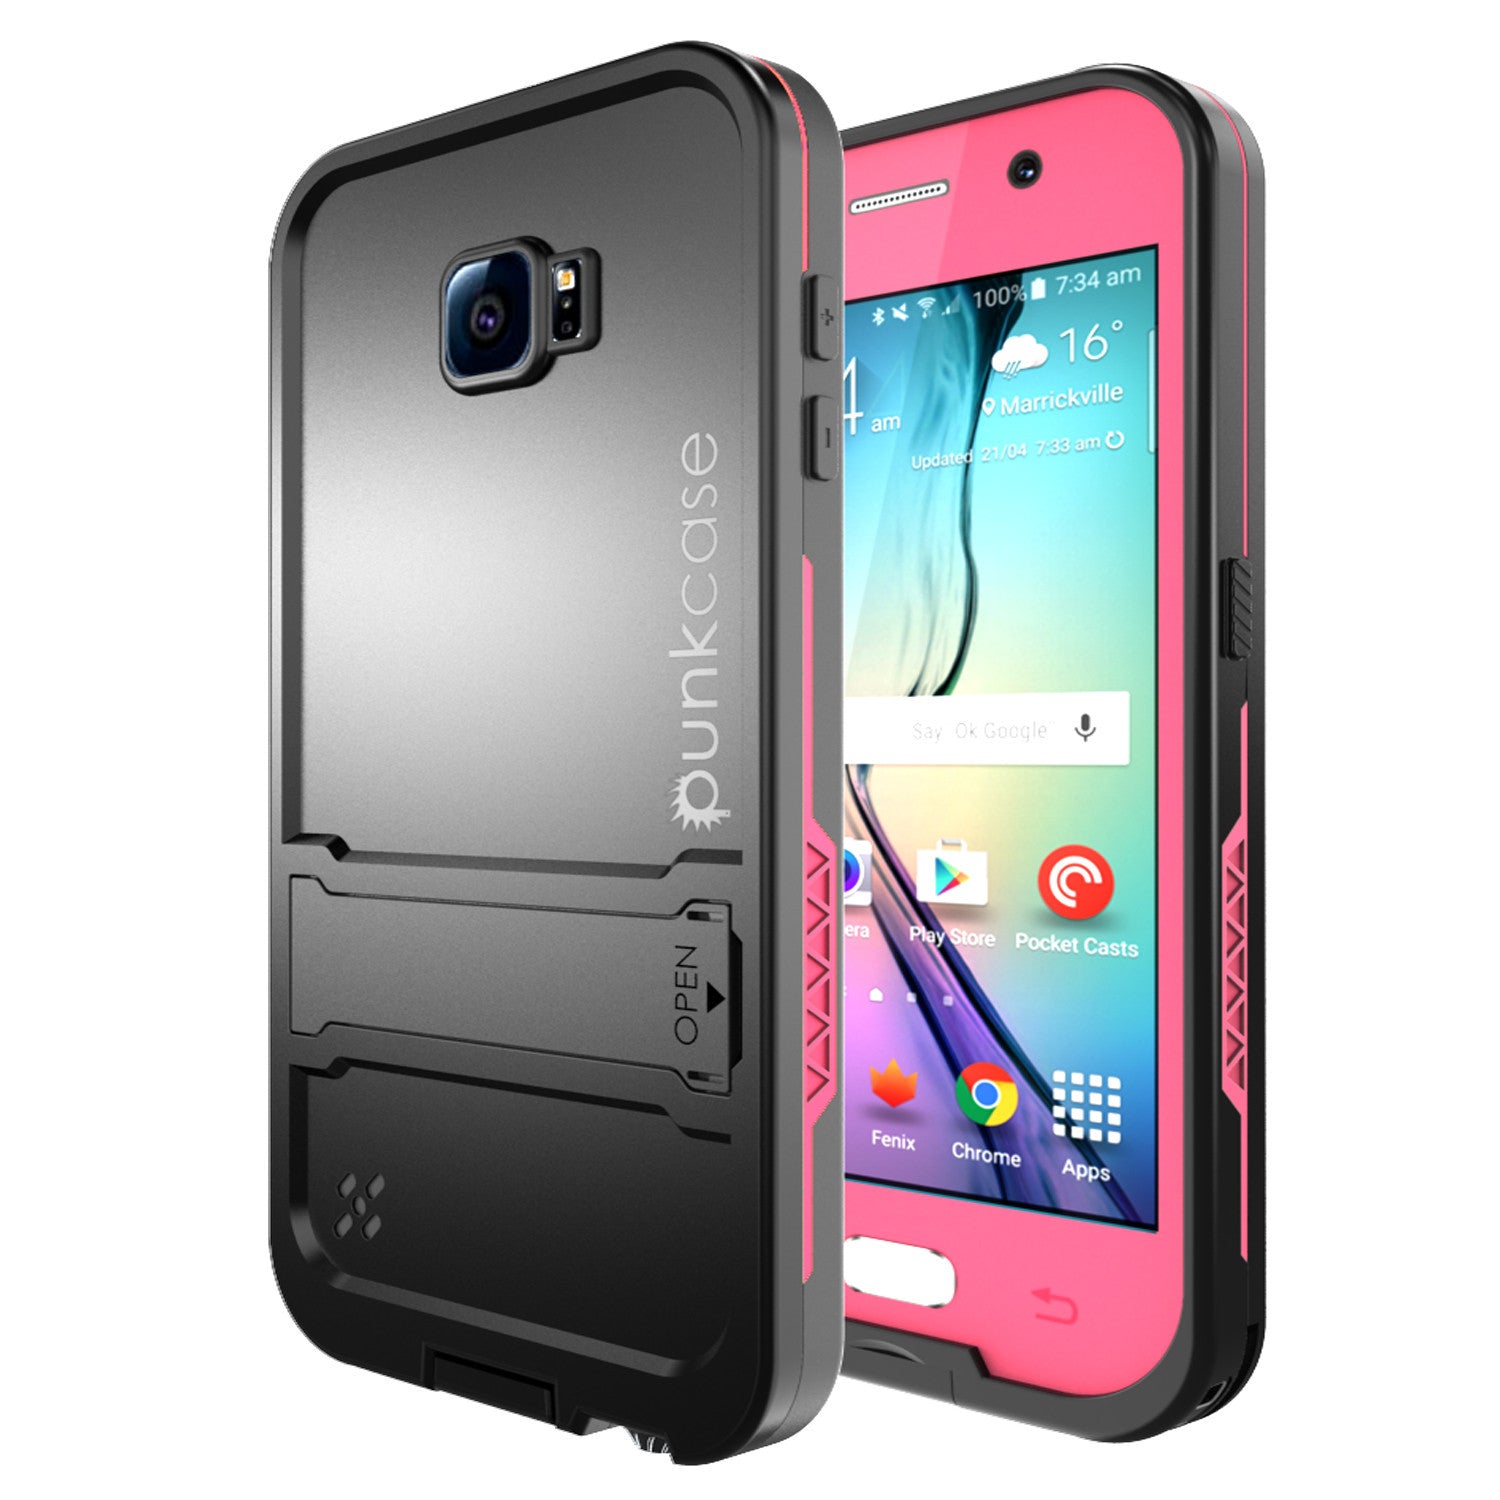 Galaxy S6 Waterproof Case, Punkcase SpikeStar Pink Water/Shock/Dirt/Snow Proof | Lifetime Warranty (Color in image: pink)